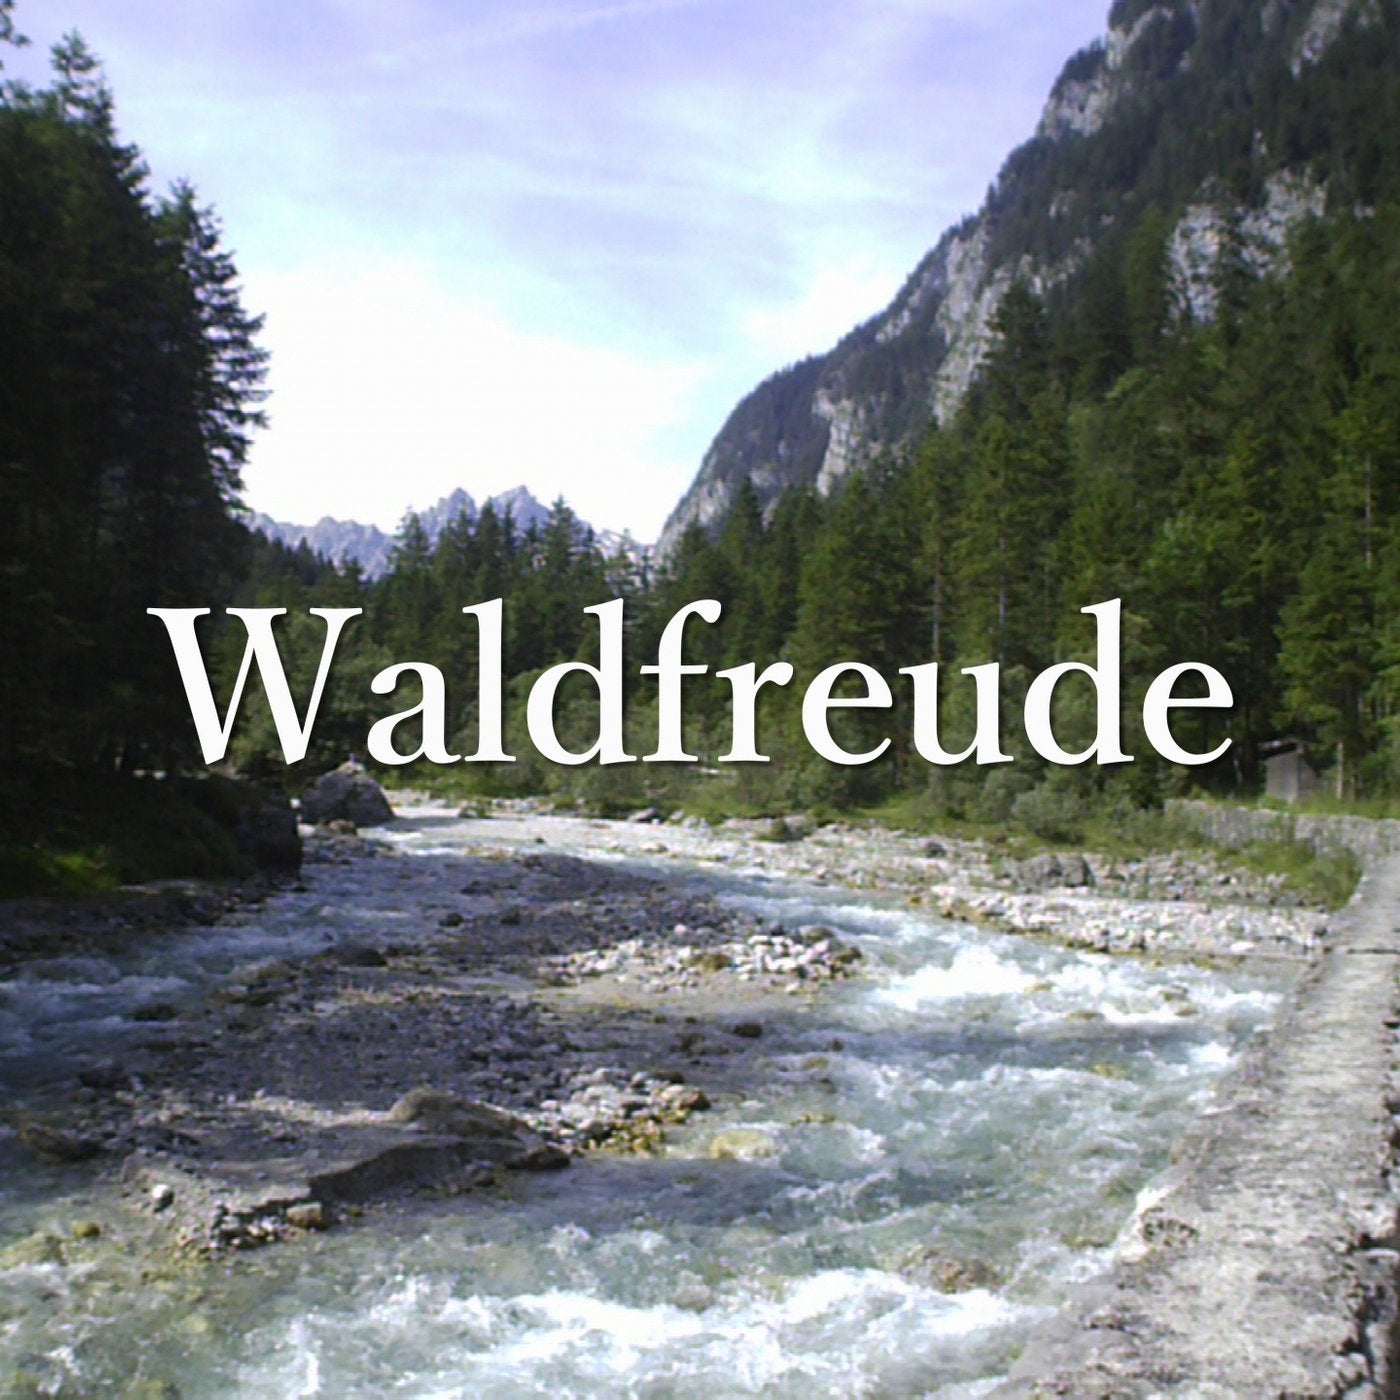 Waldfreude (About 30 Electronic Tracks)